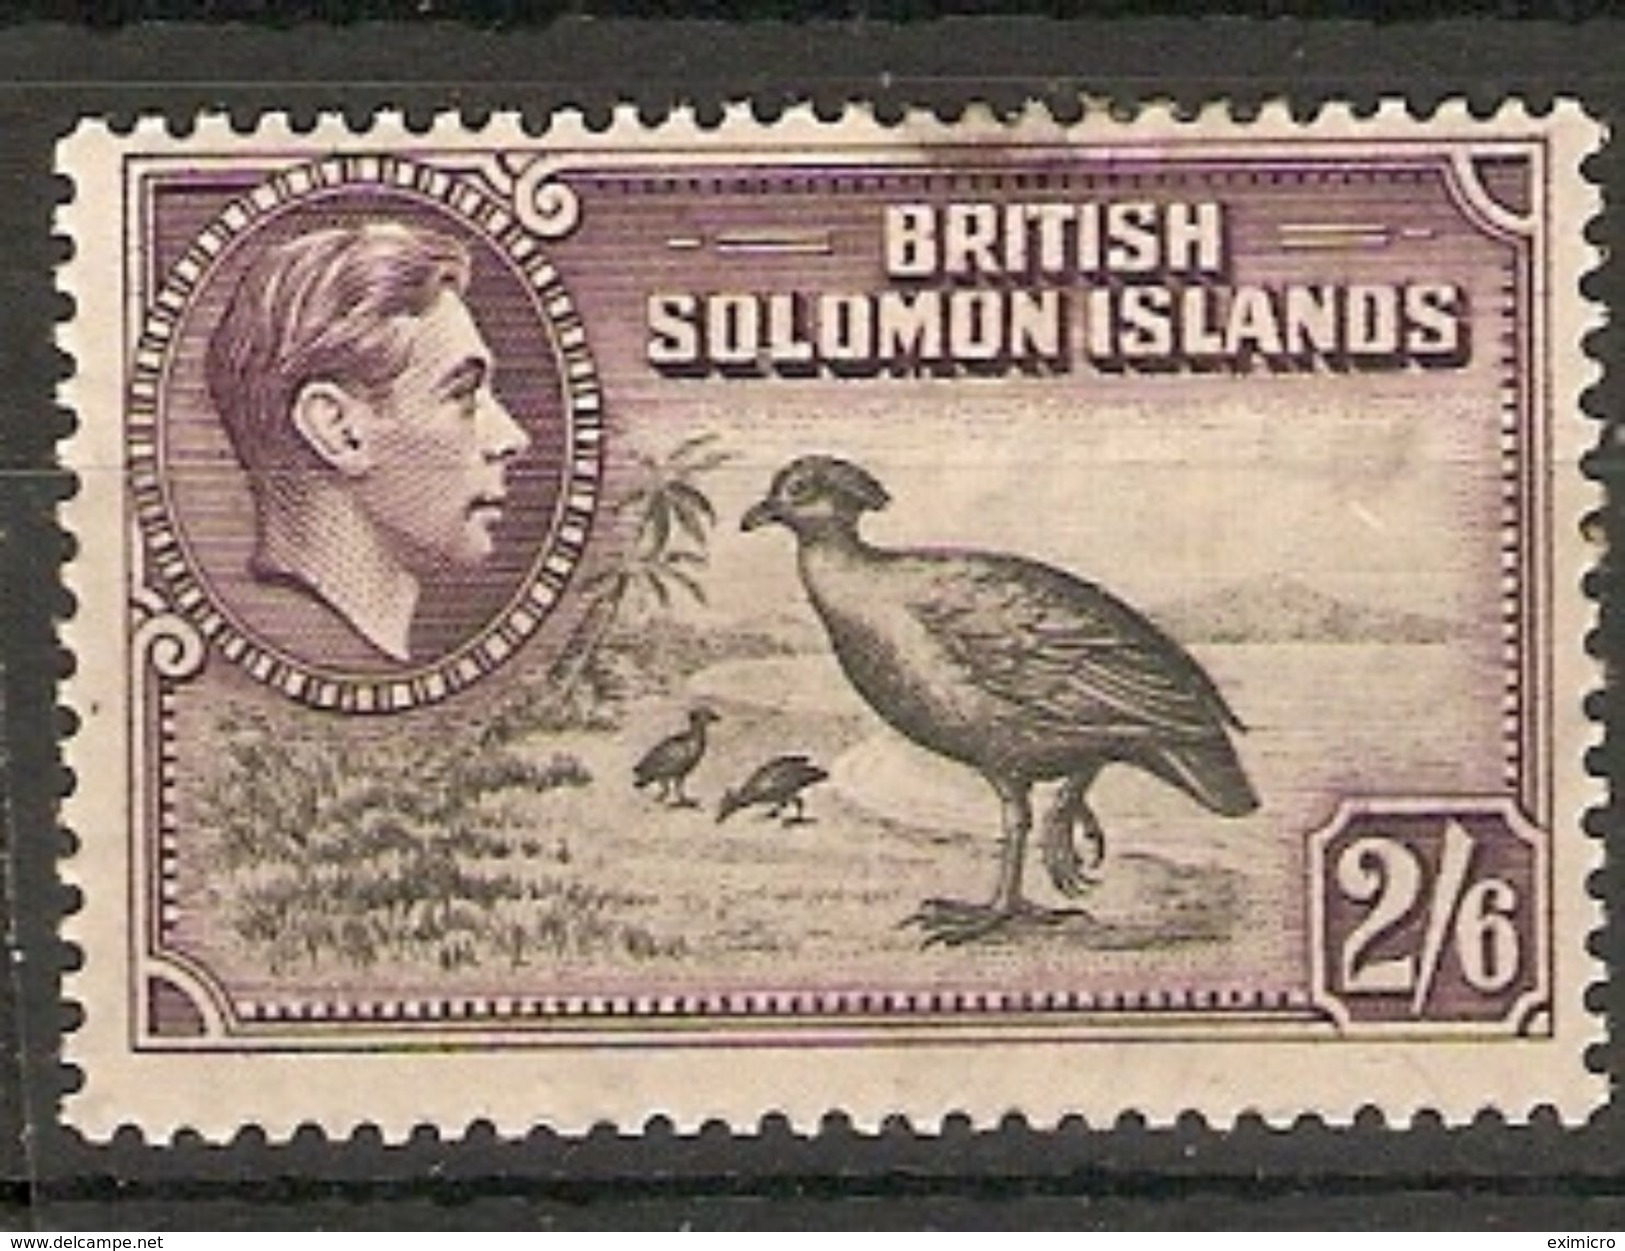 BRITISH SOLOMON ISLANDS 1939 2s 6d SG 70 MOUNTED MINT Cat £32 - Salomonen (...-1978)